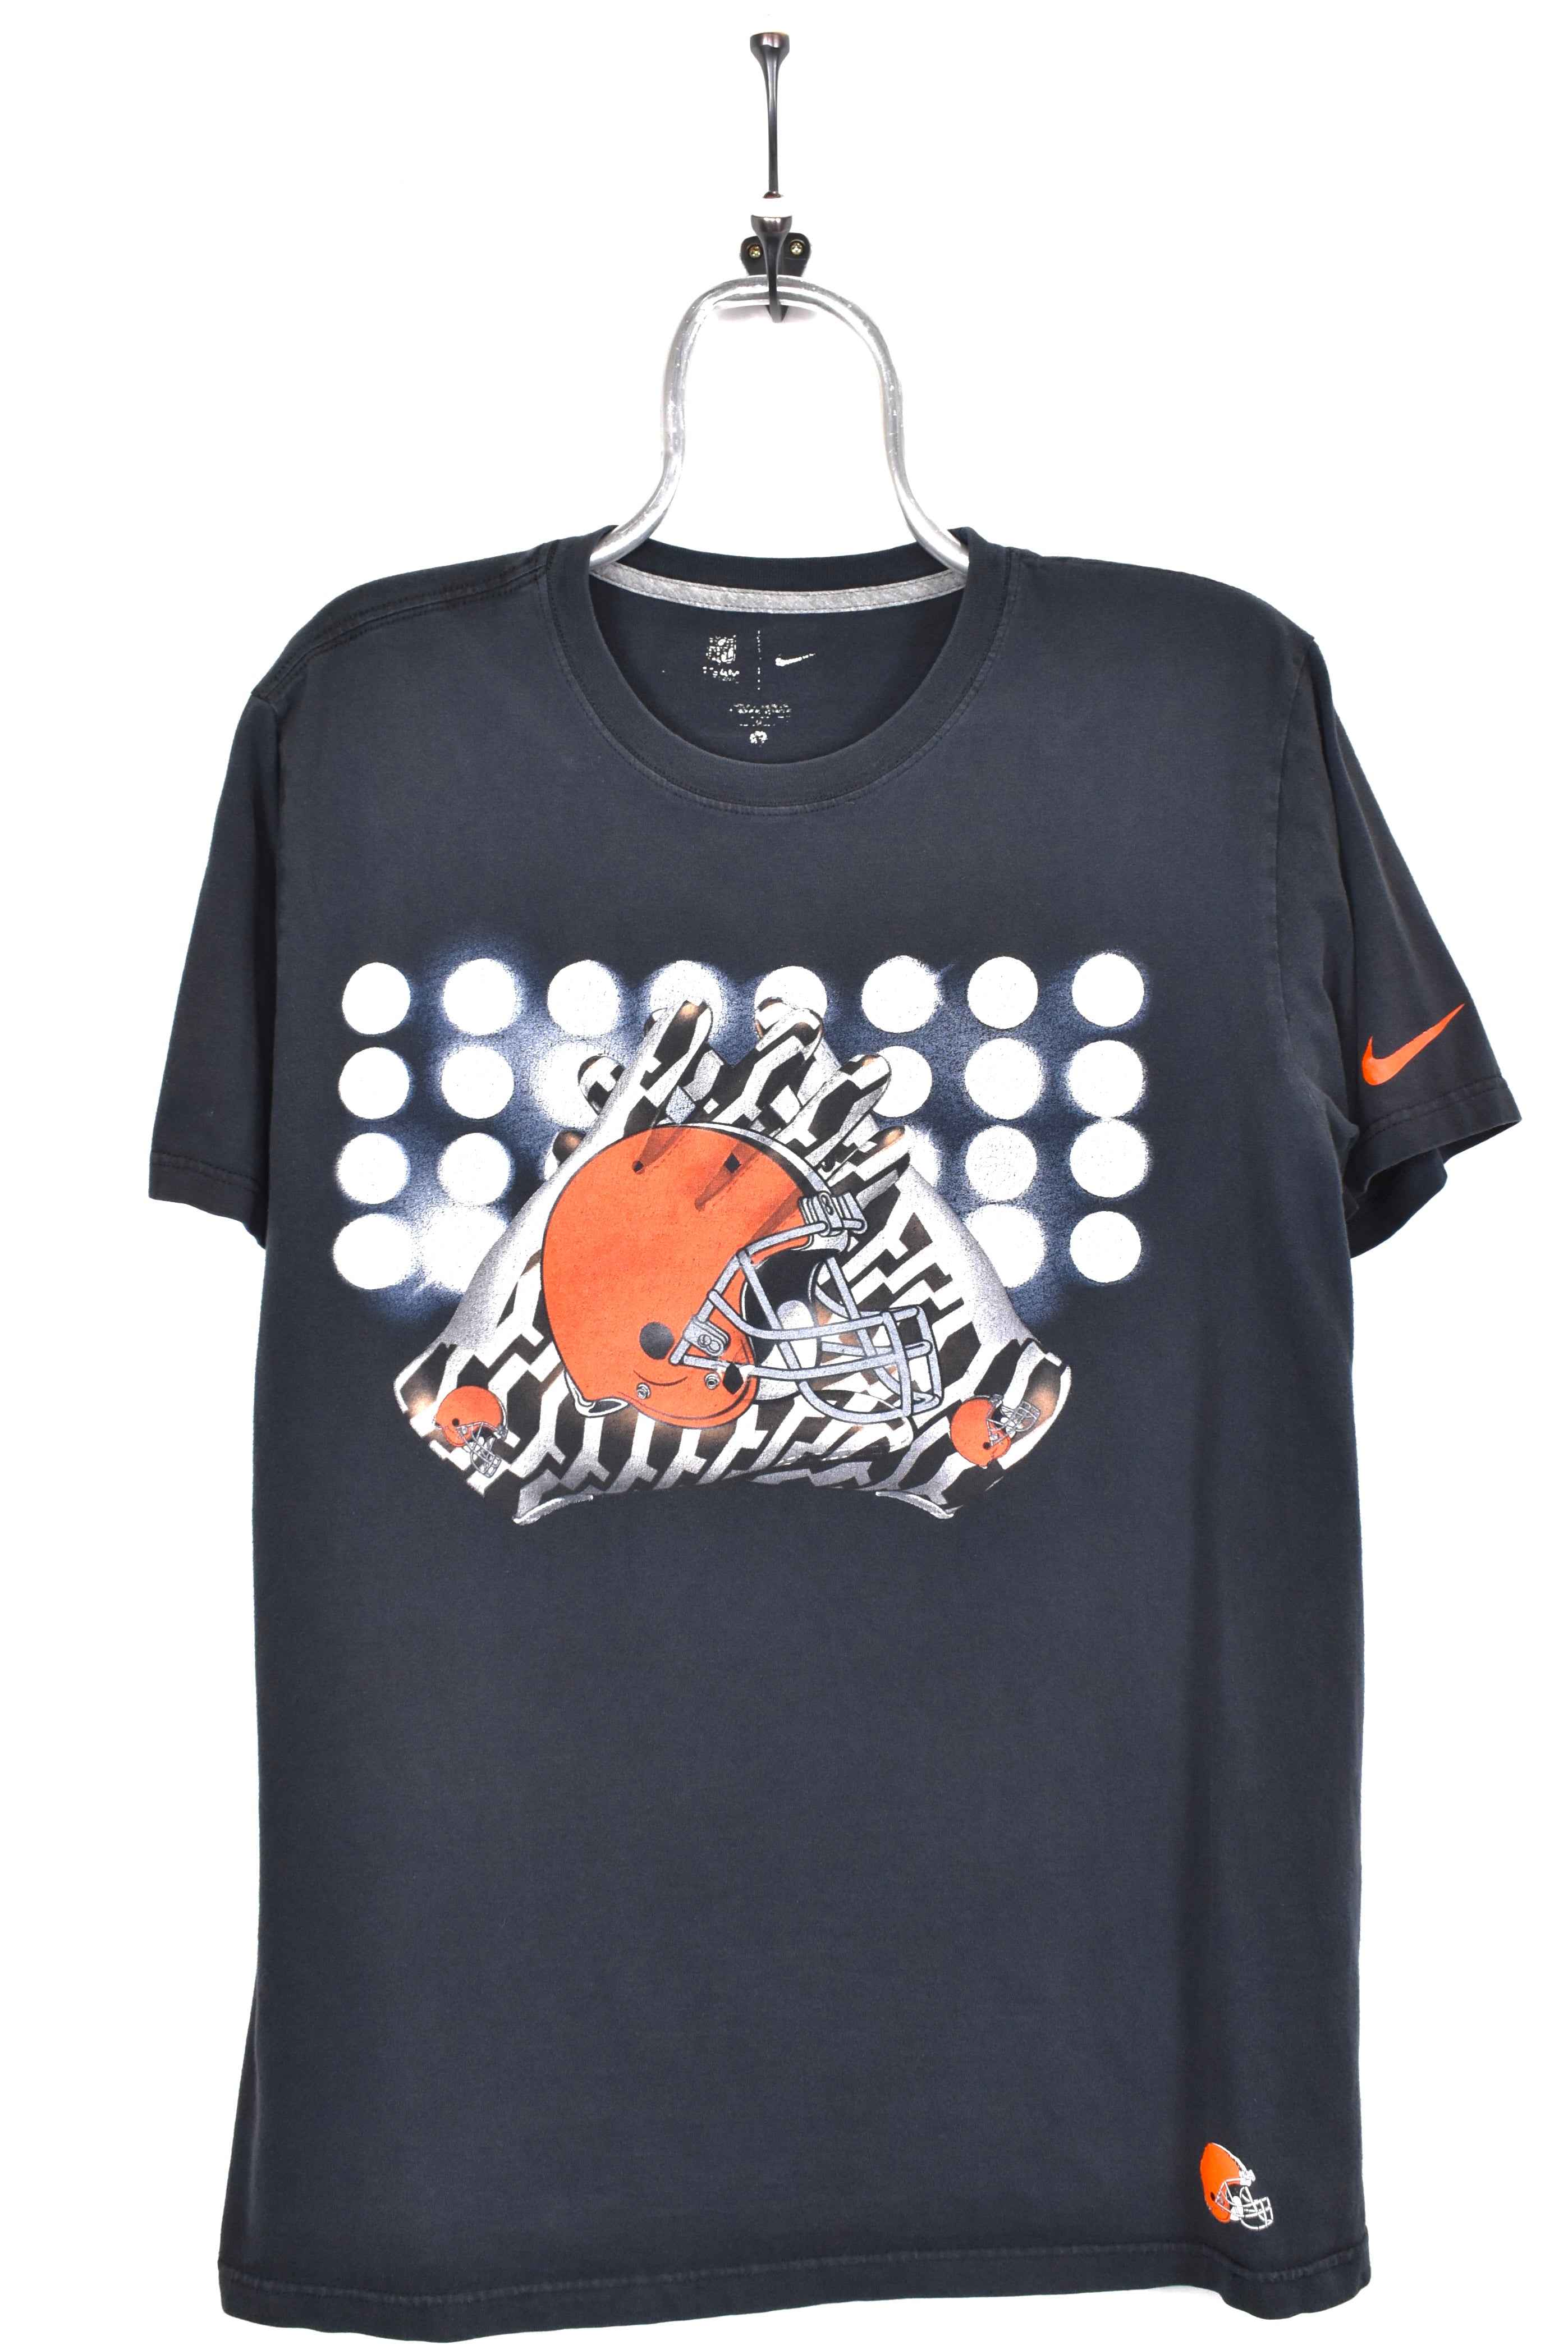 Vintage Chicago Bears shirt, NFL black graphic tee - AU Medium PRO SPORT